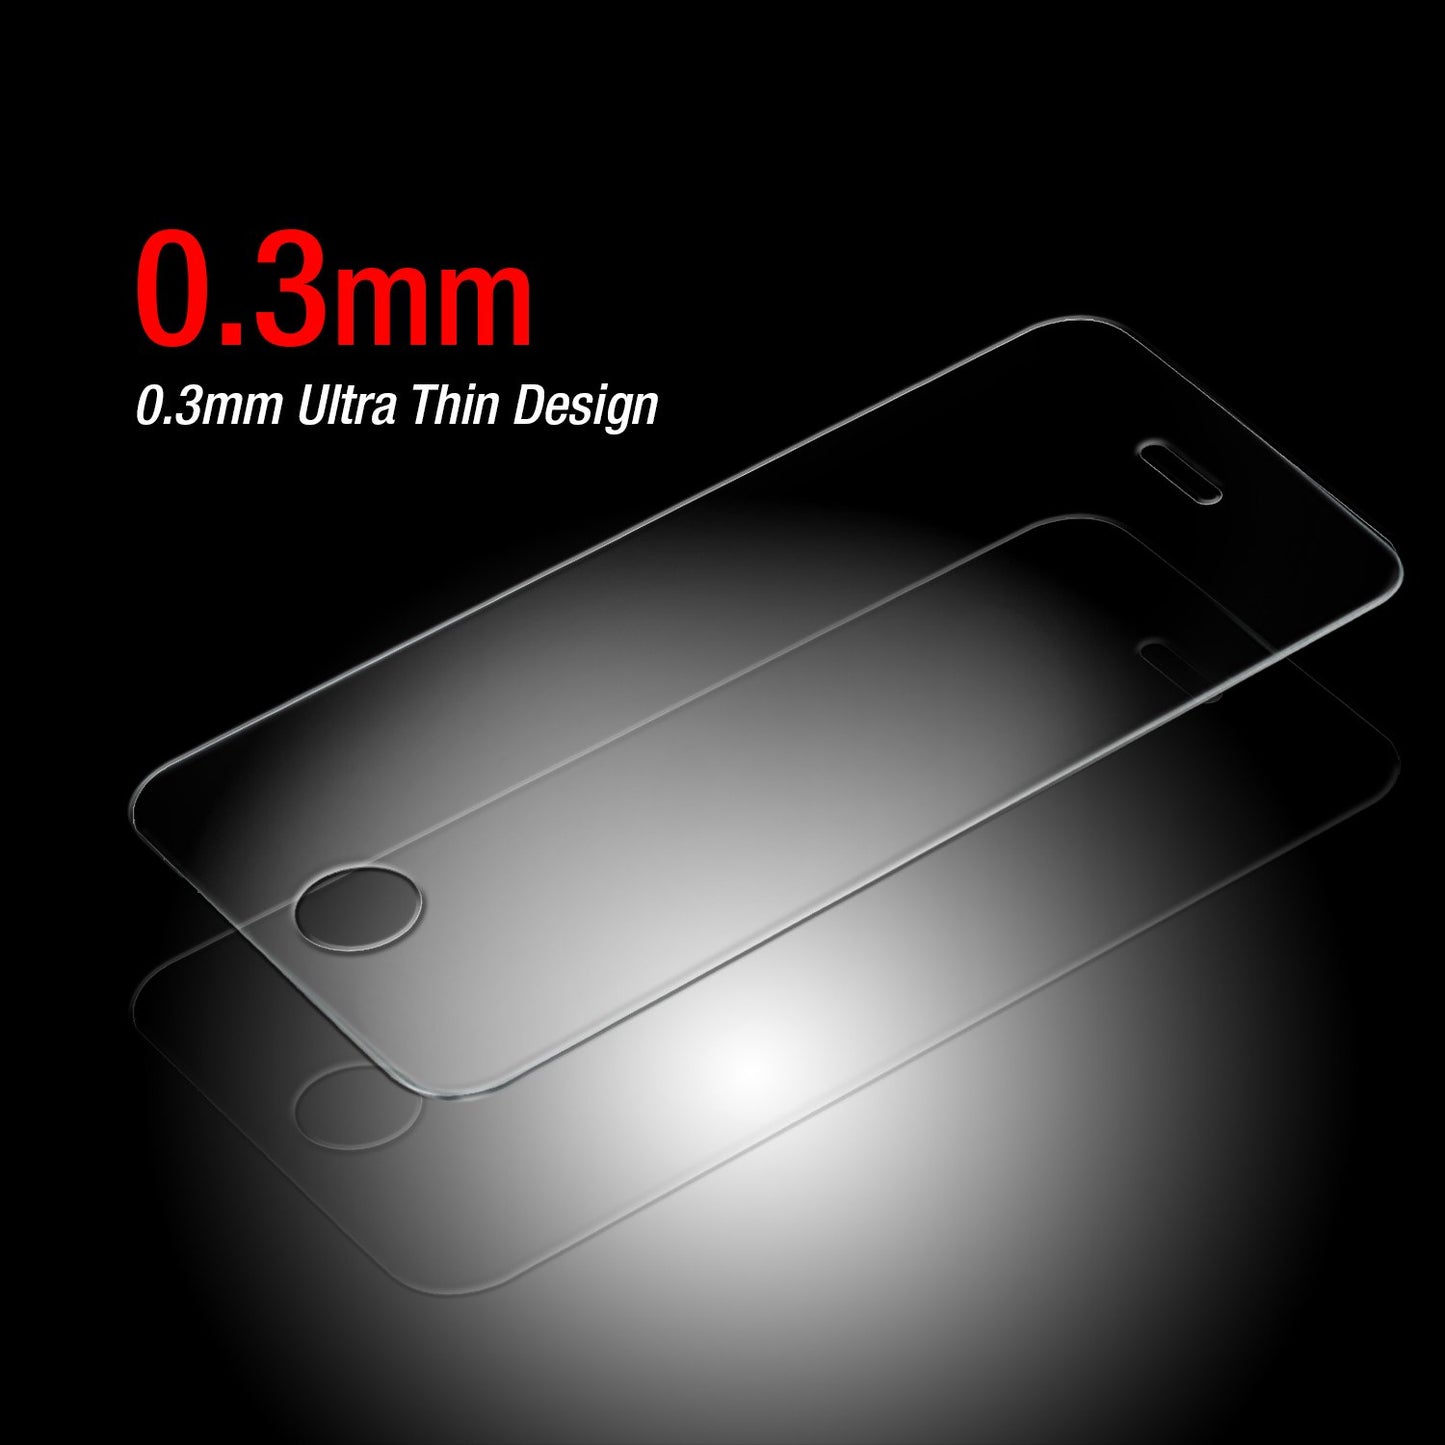 SGSAMJ3E - Cellet Premium Tempered Glass Screen Protector for Samsung Galaxy J3 Prime (0.3mm)